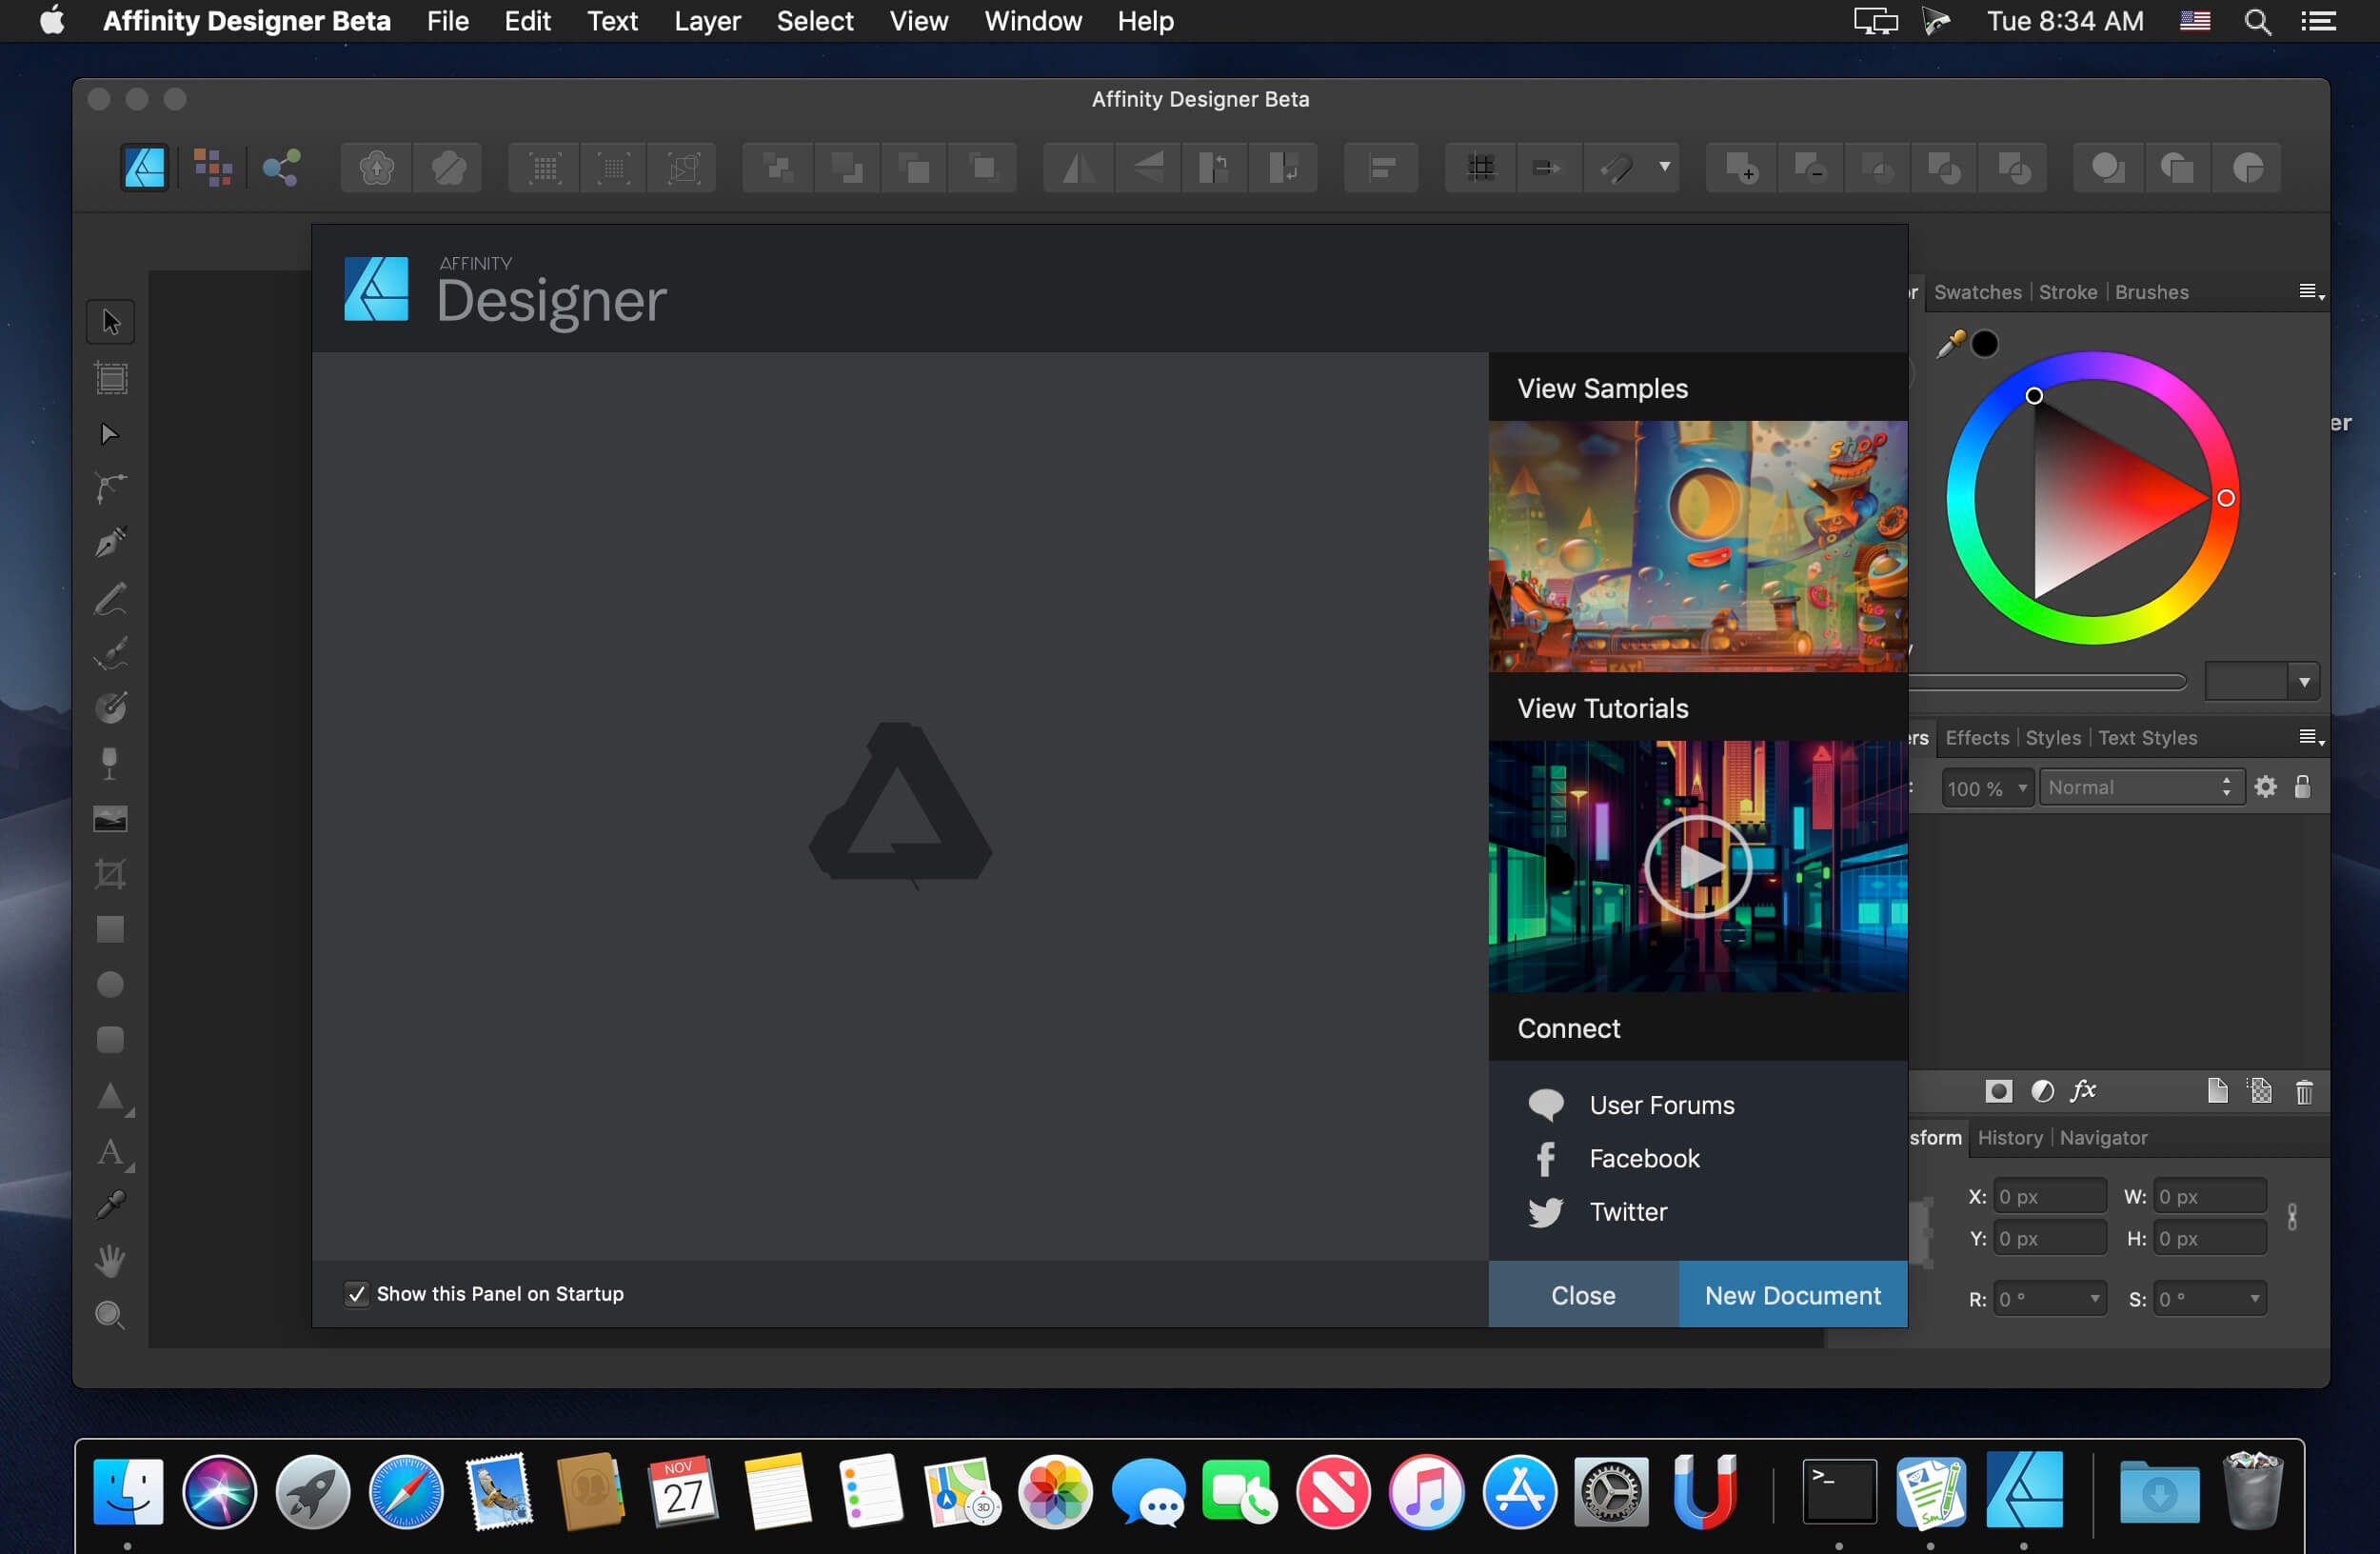 FotoJet Designer 1.2.9 download the new version for mac